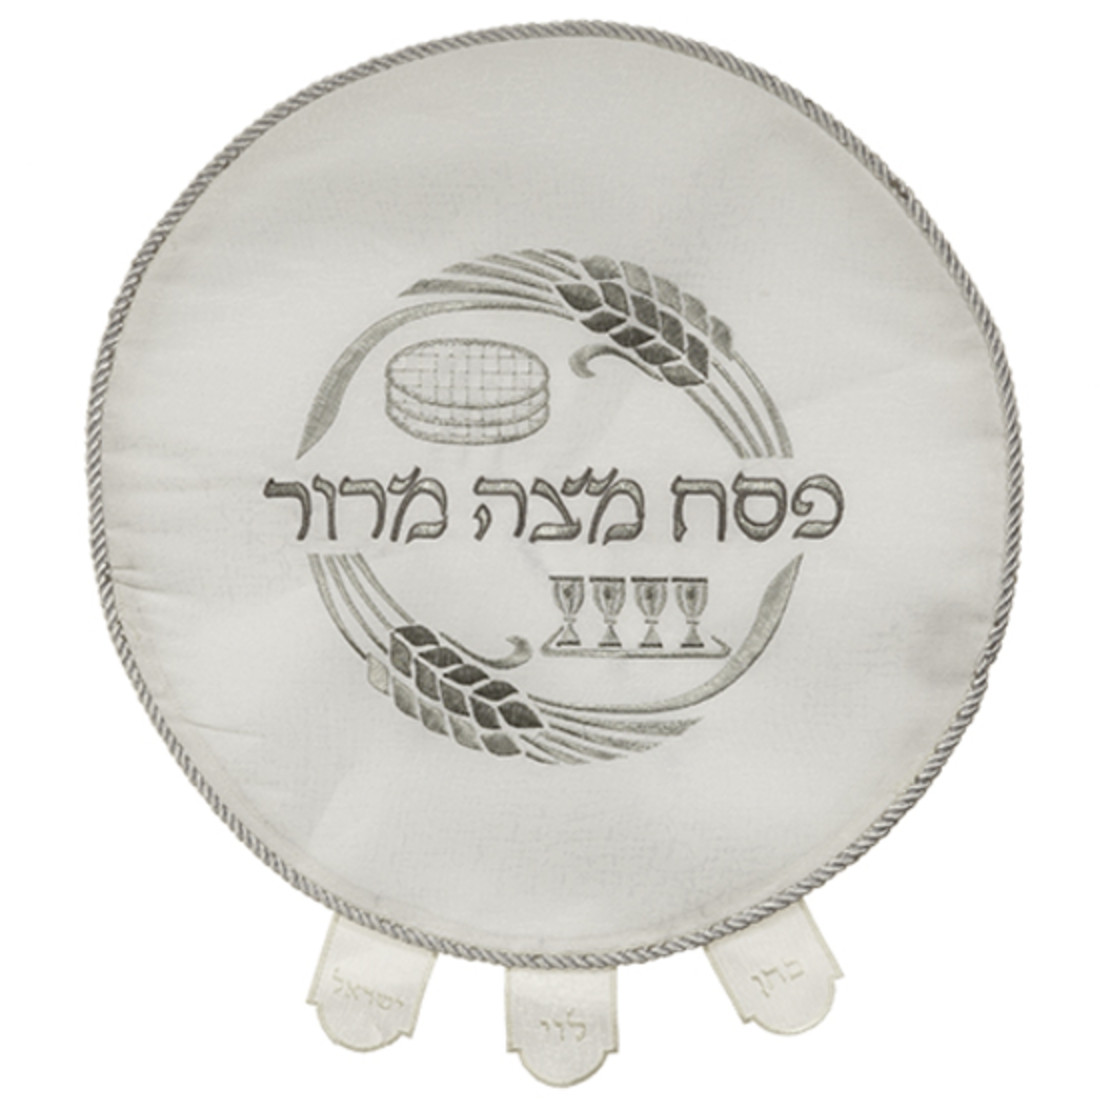 Elegant Passover cover from Brocket 45 cm